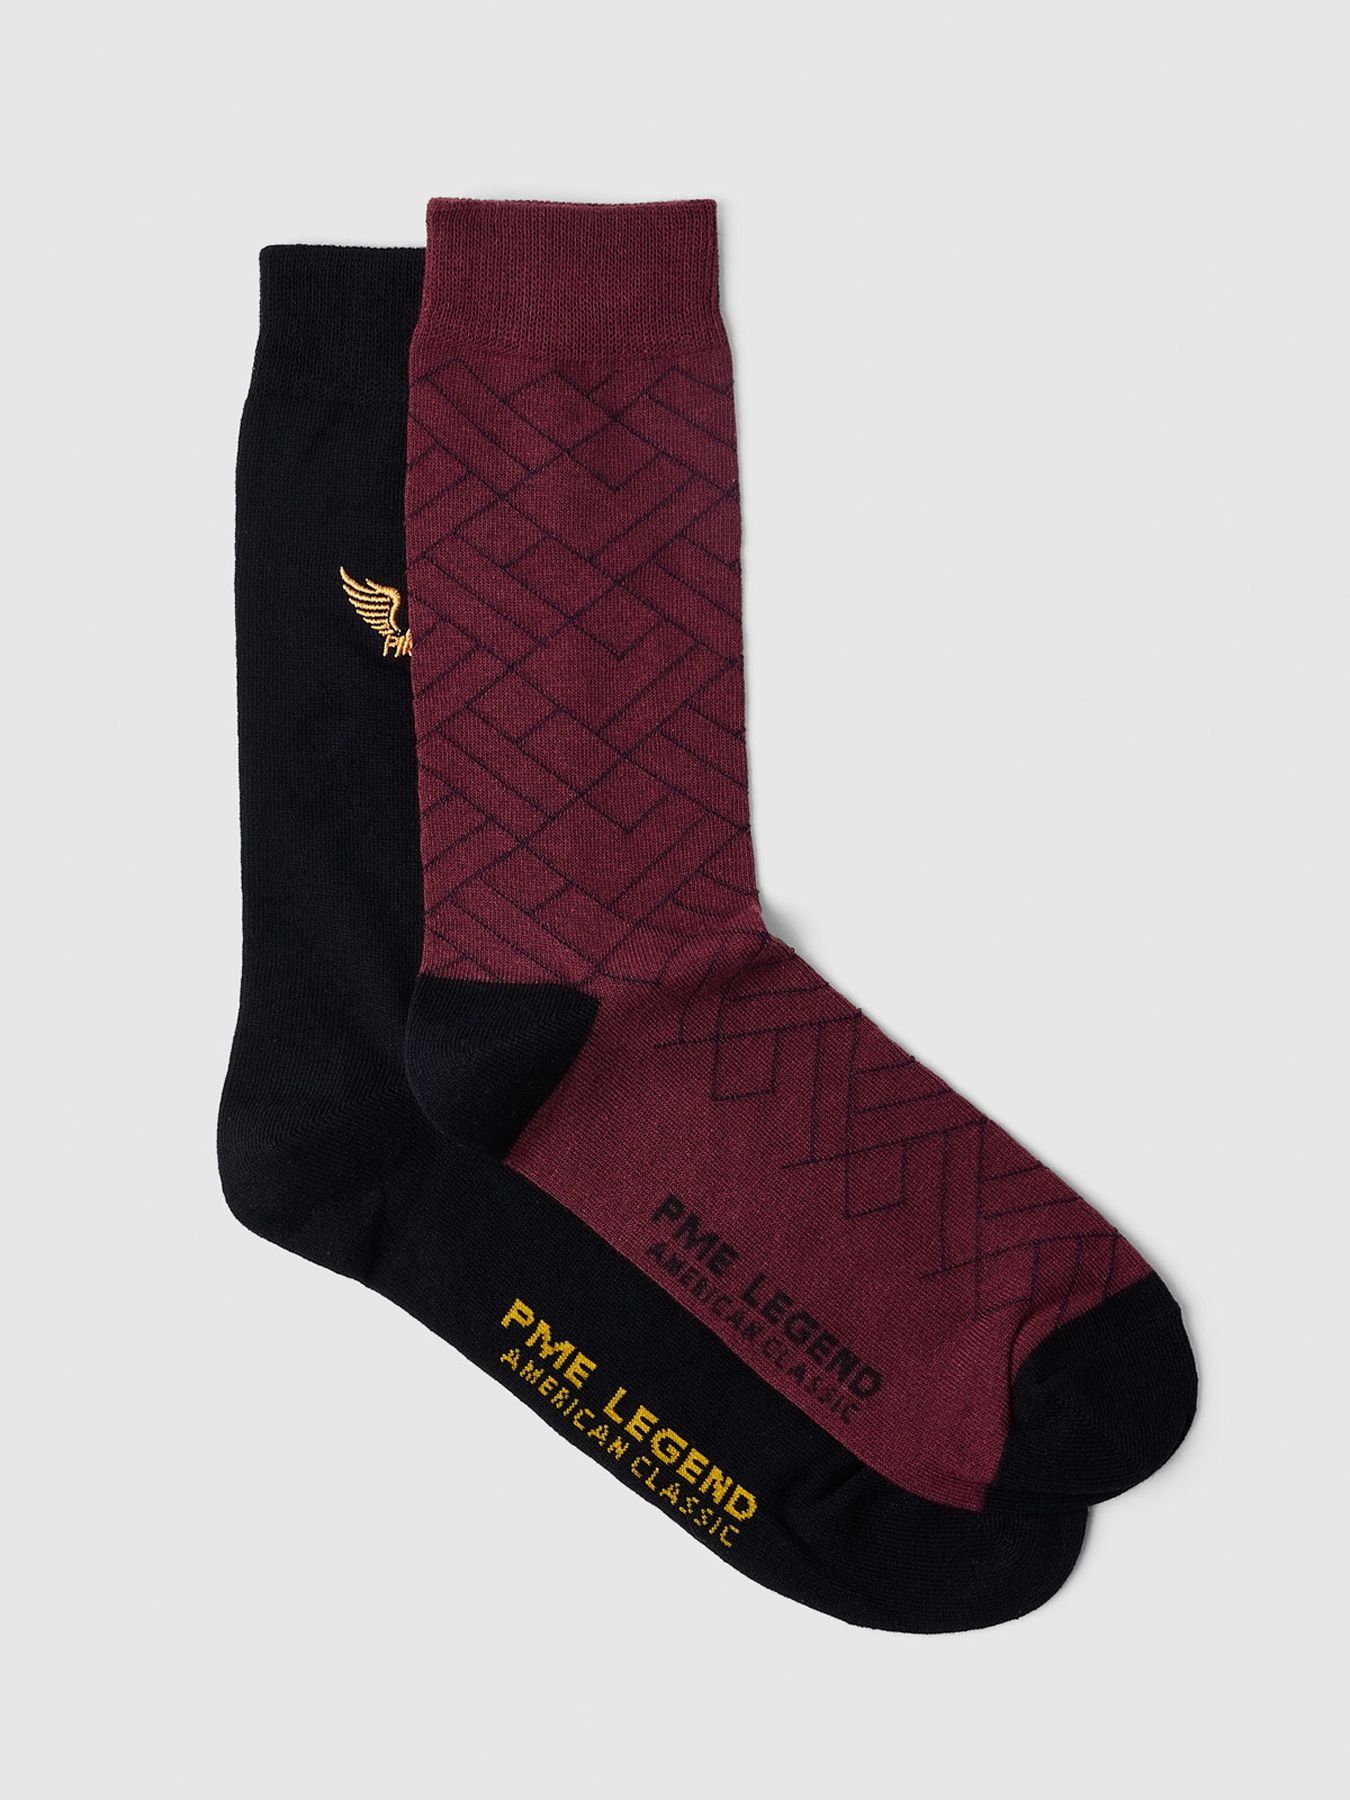 Pme Legend Socks Cotton blend socks 2-pack Chocolate Truffle 00105123-8207